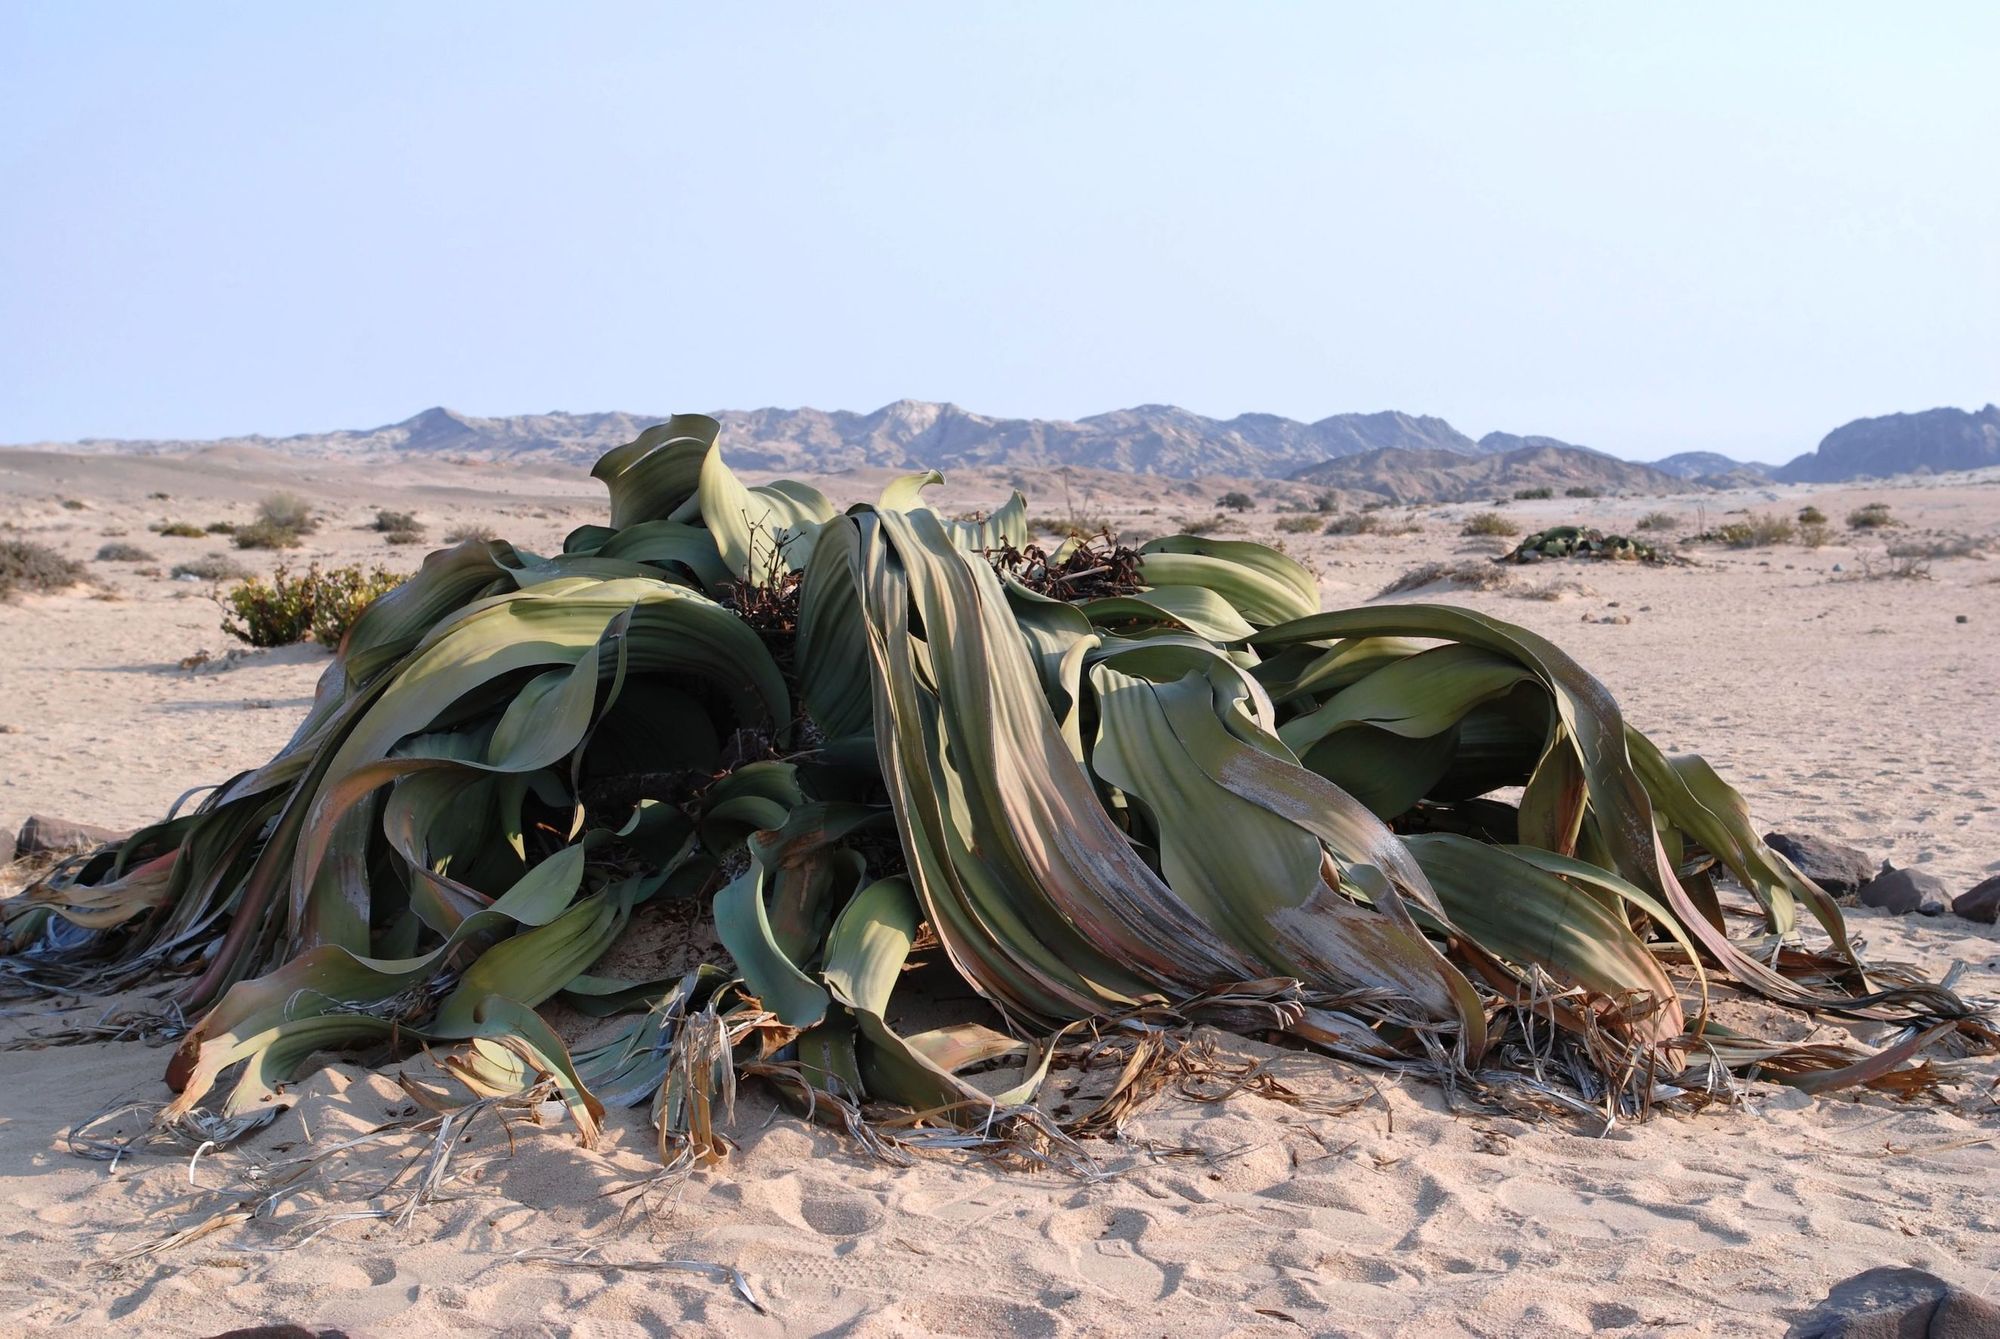 A welwitschia plant